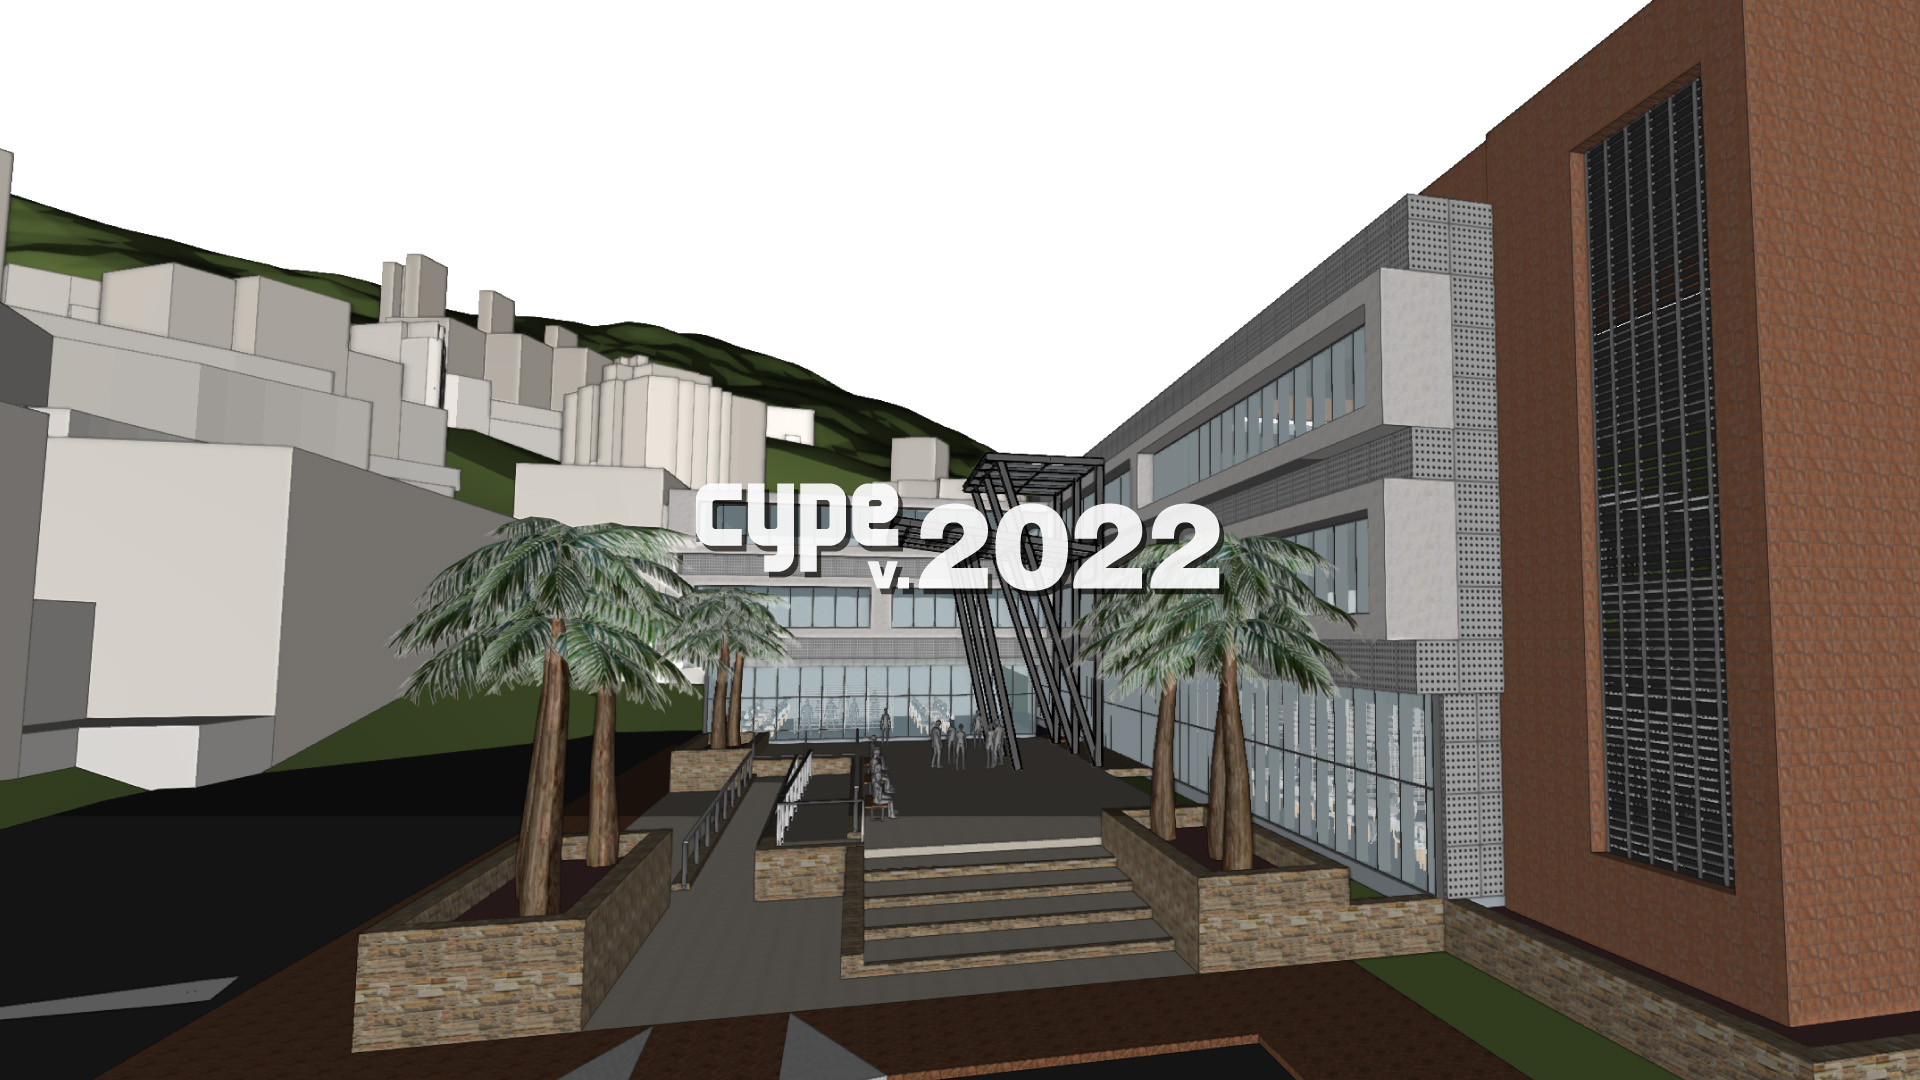 cype version 2022